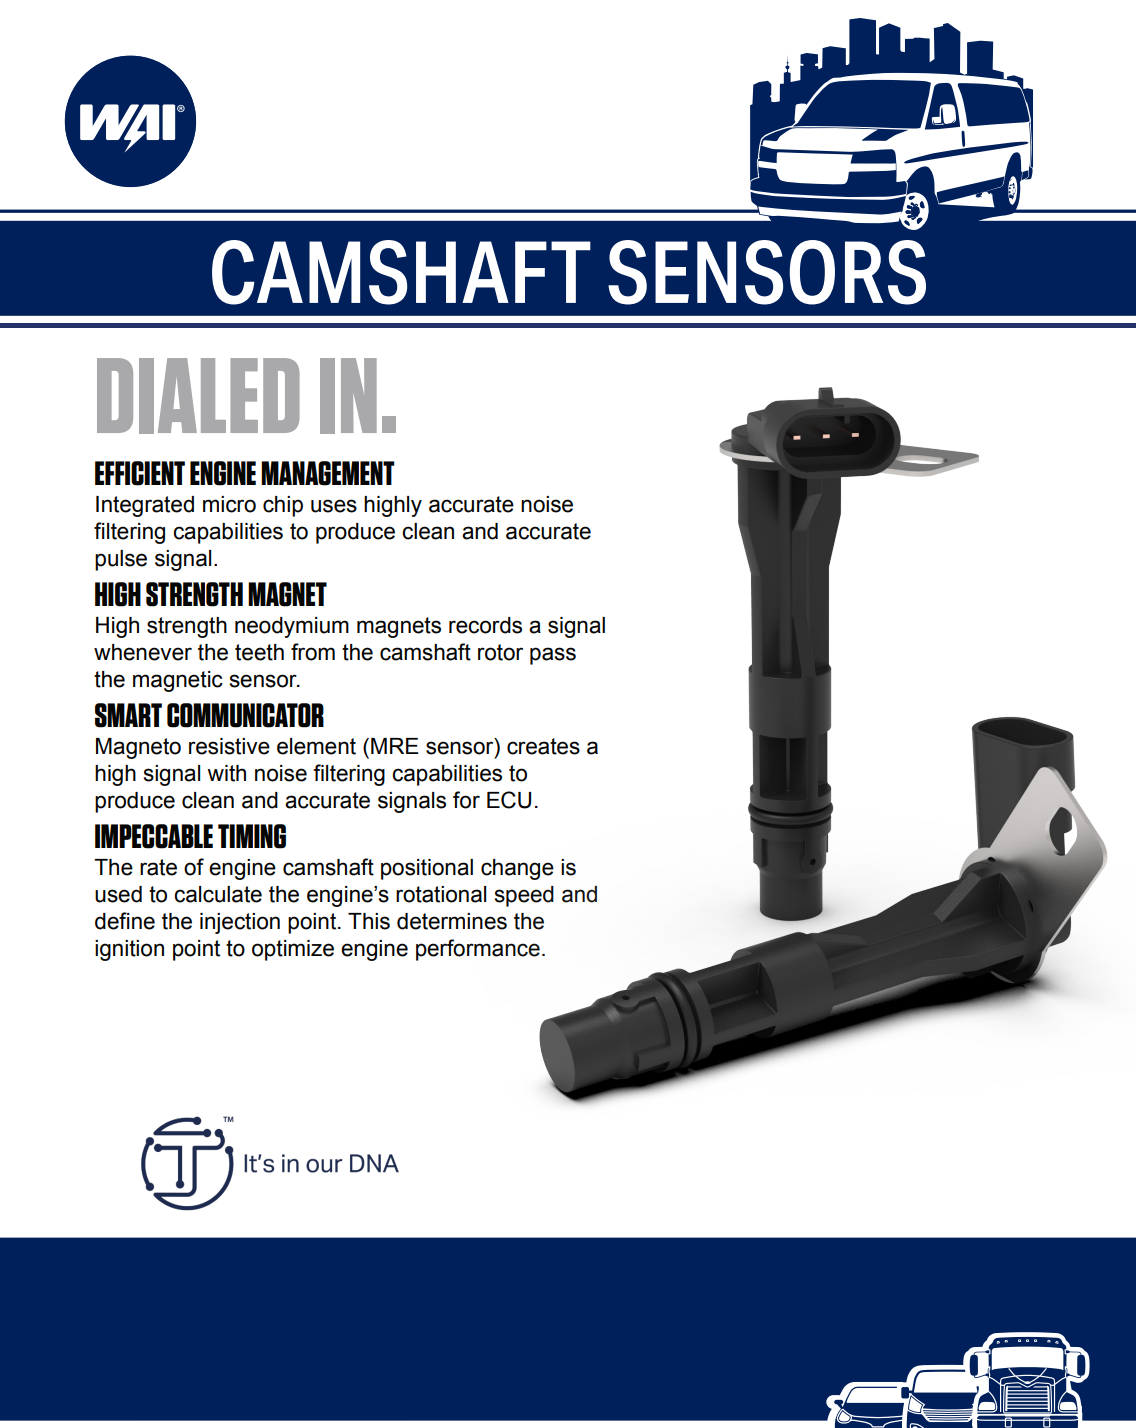 WAI Camshaft Sensors